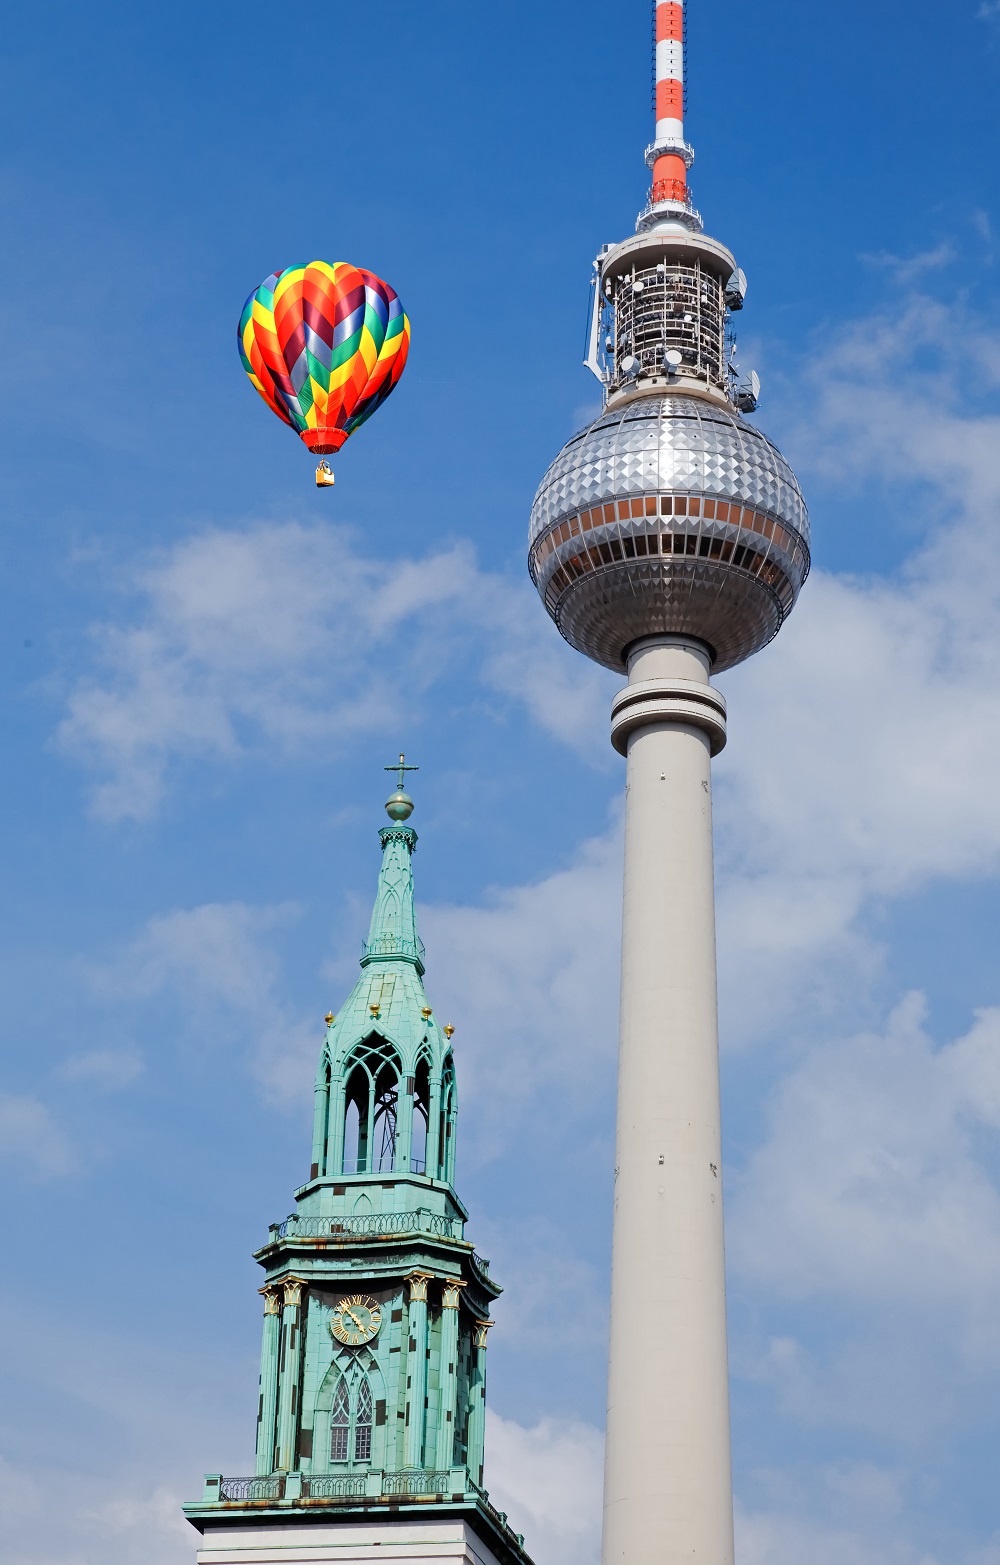 Ballonfahrt in Berlin